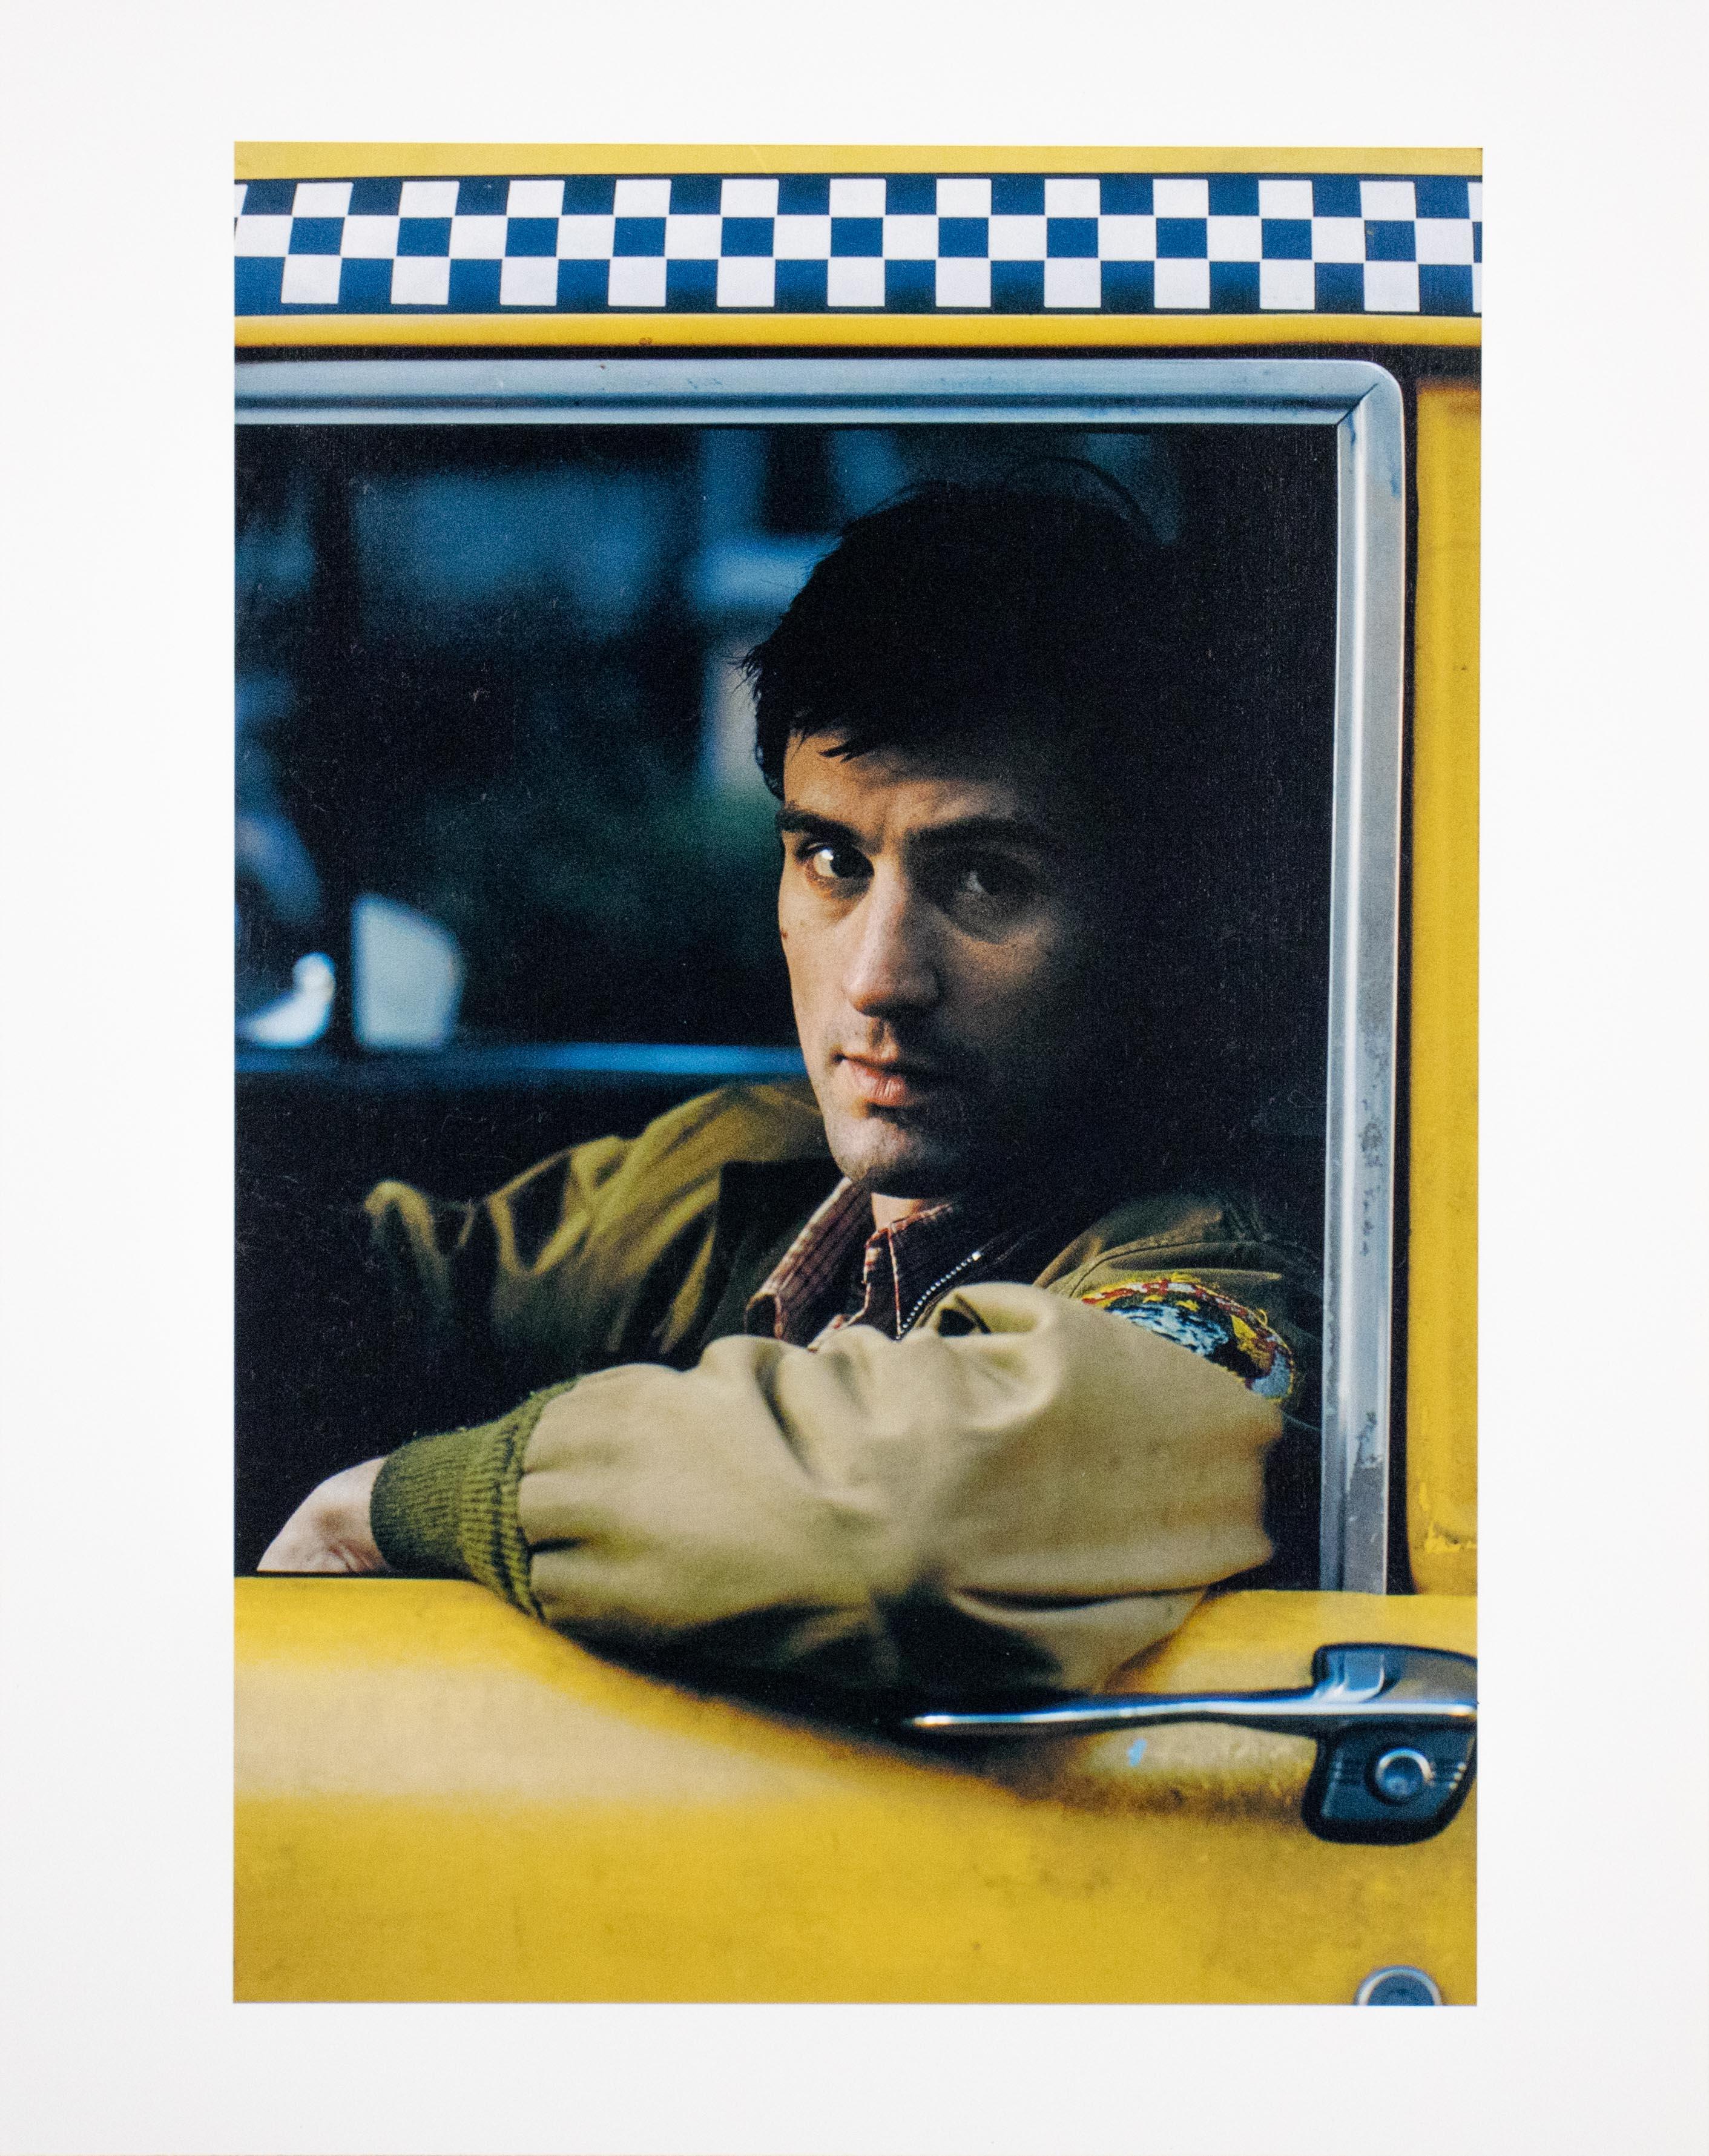 Steve Schapiro Portrait Photograph - Robert DeNiro in Taxi Driver - Hand-Signed Photograph